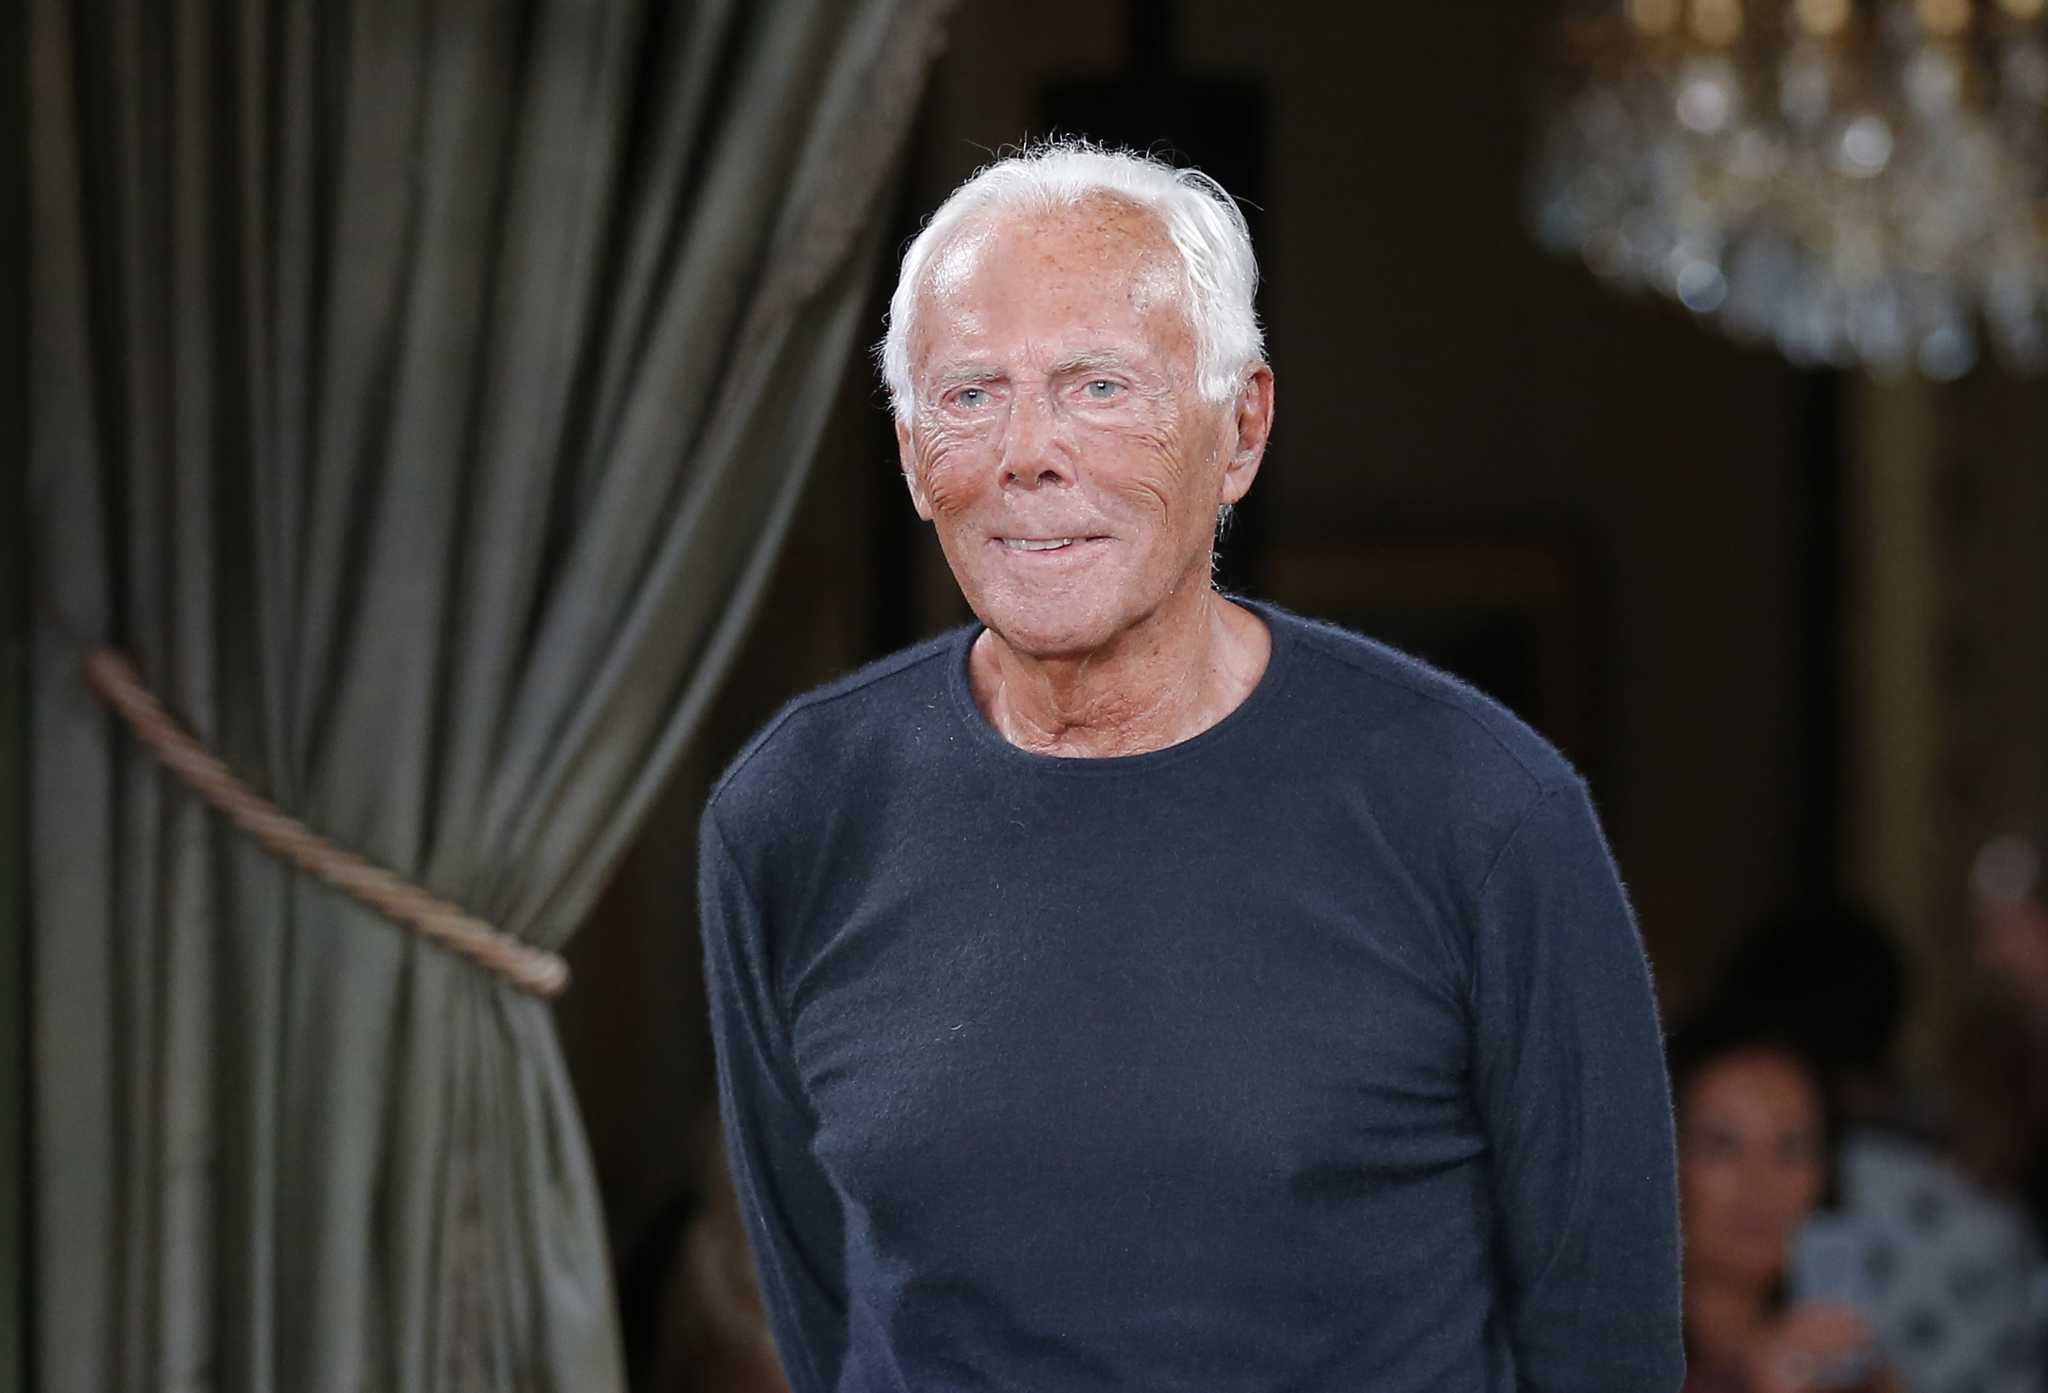 Milan fashion mainstay Giorgio Armani celebrates 90th birthday like any other day: at work